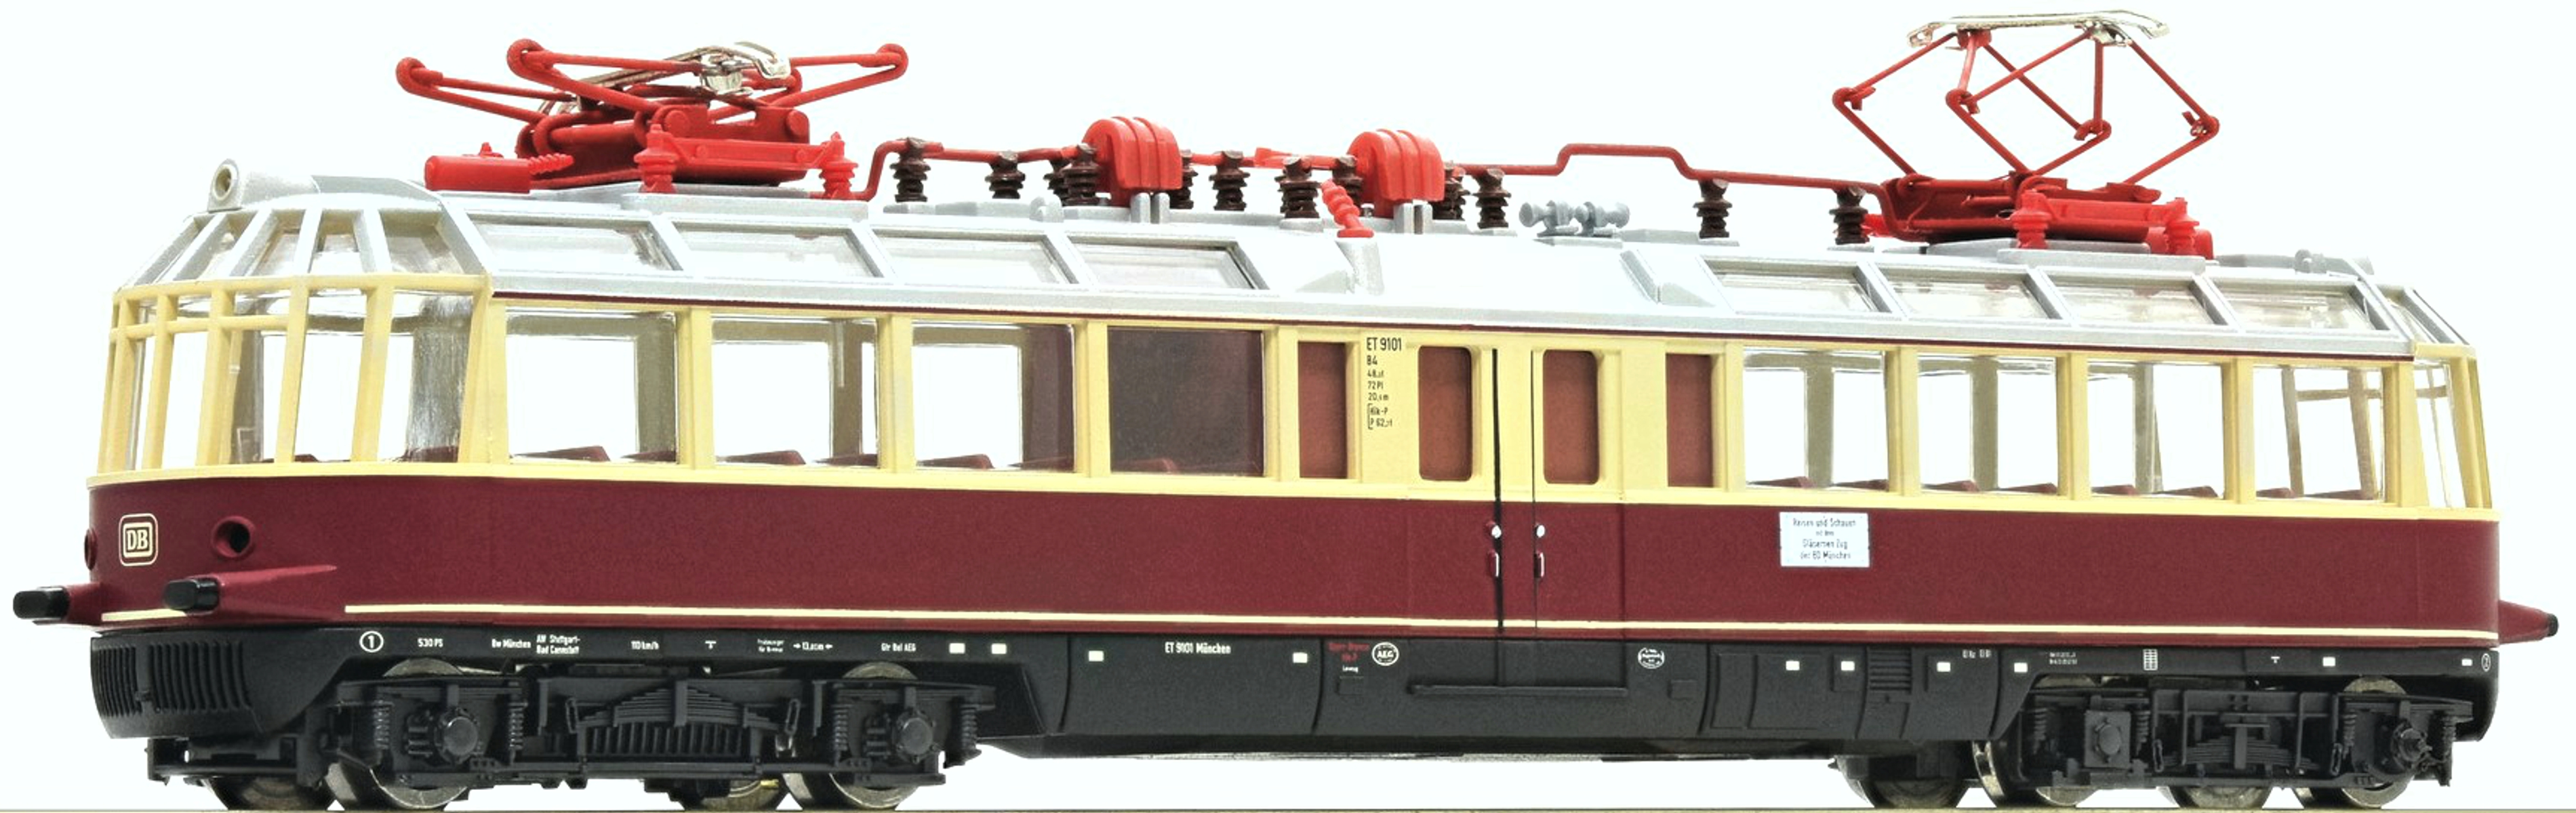 ROCO 43525 ガラス電車 - 鉄道模型